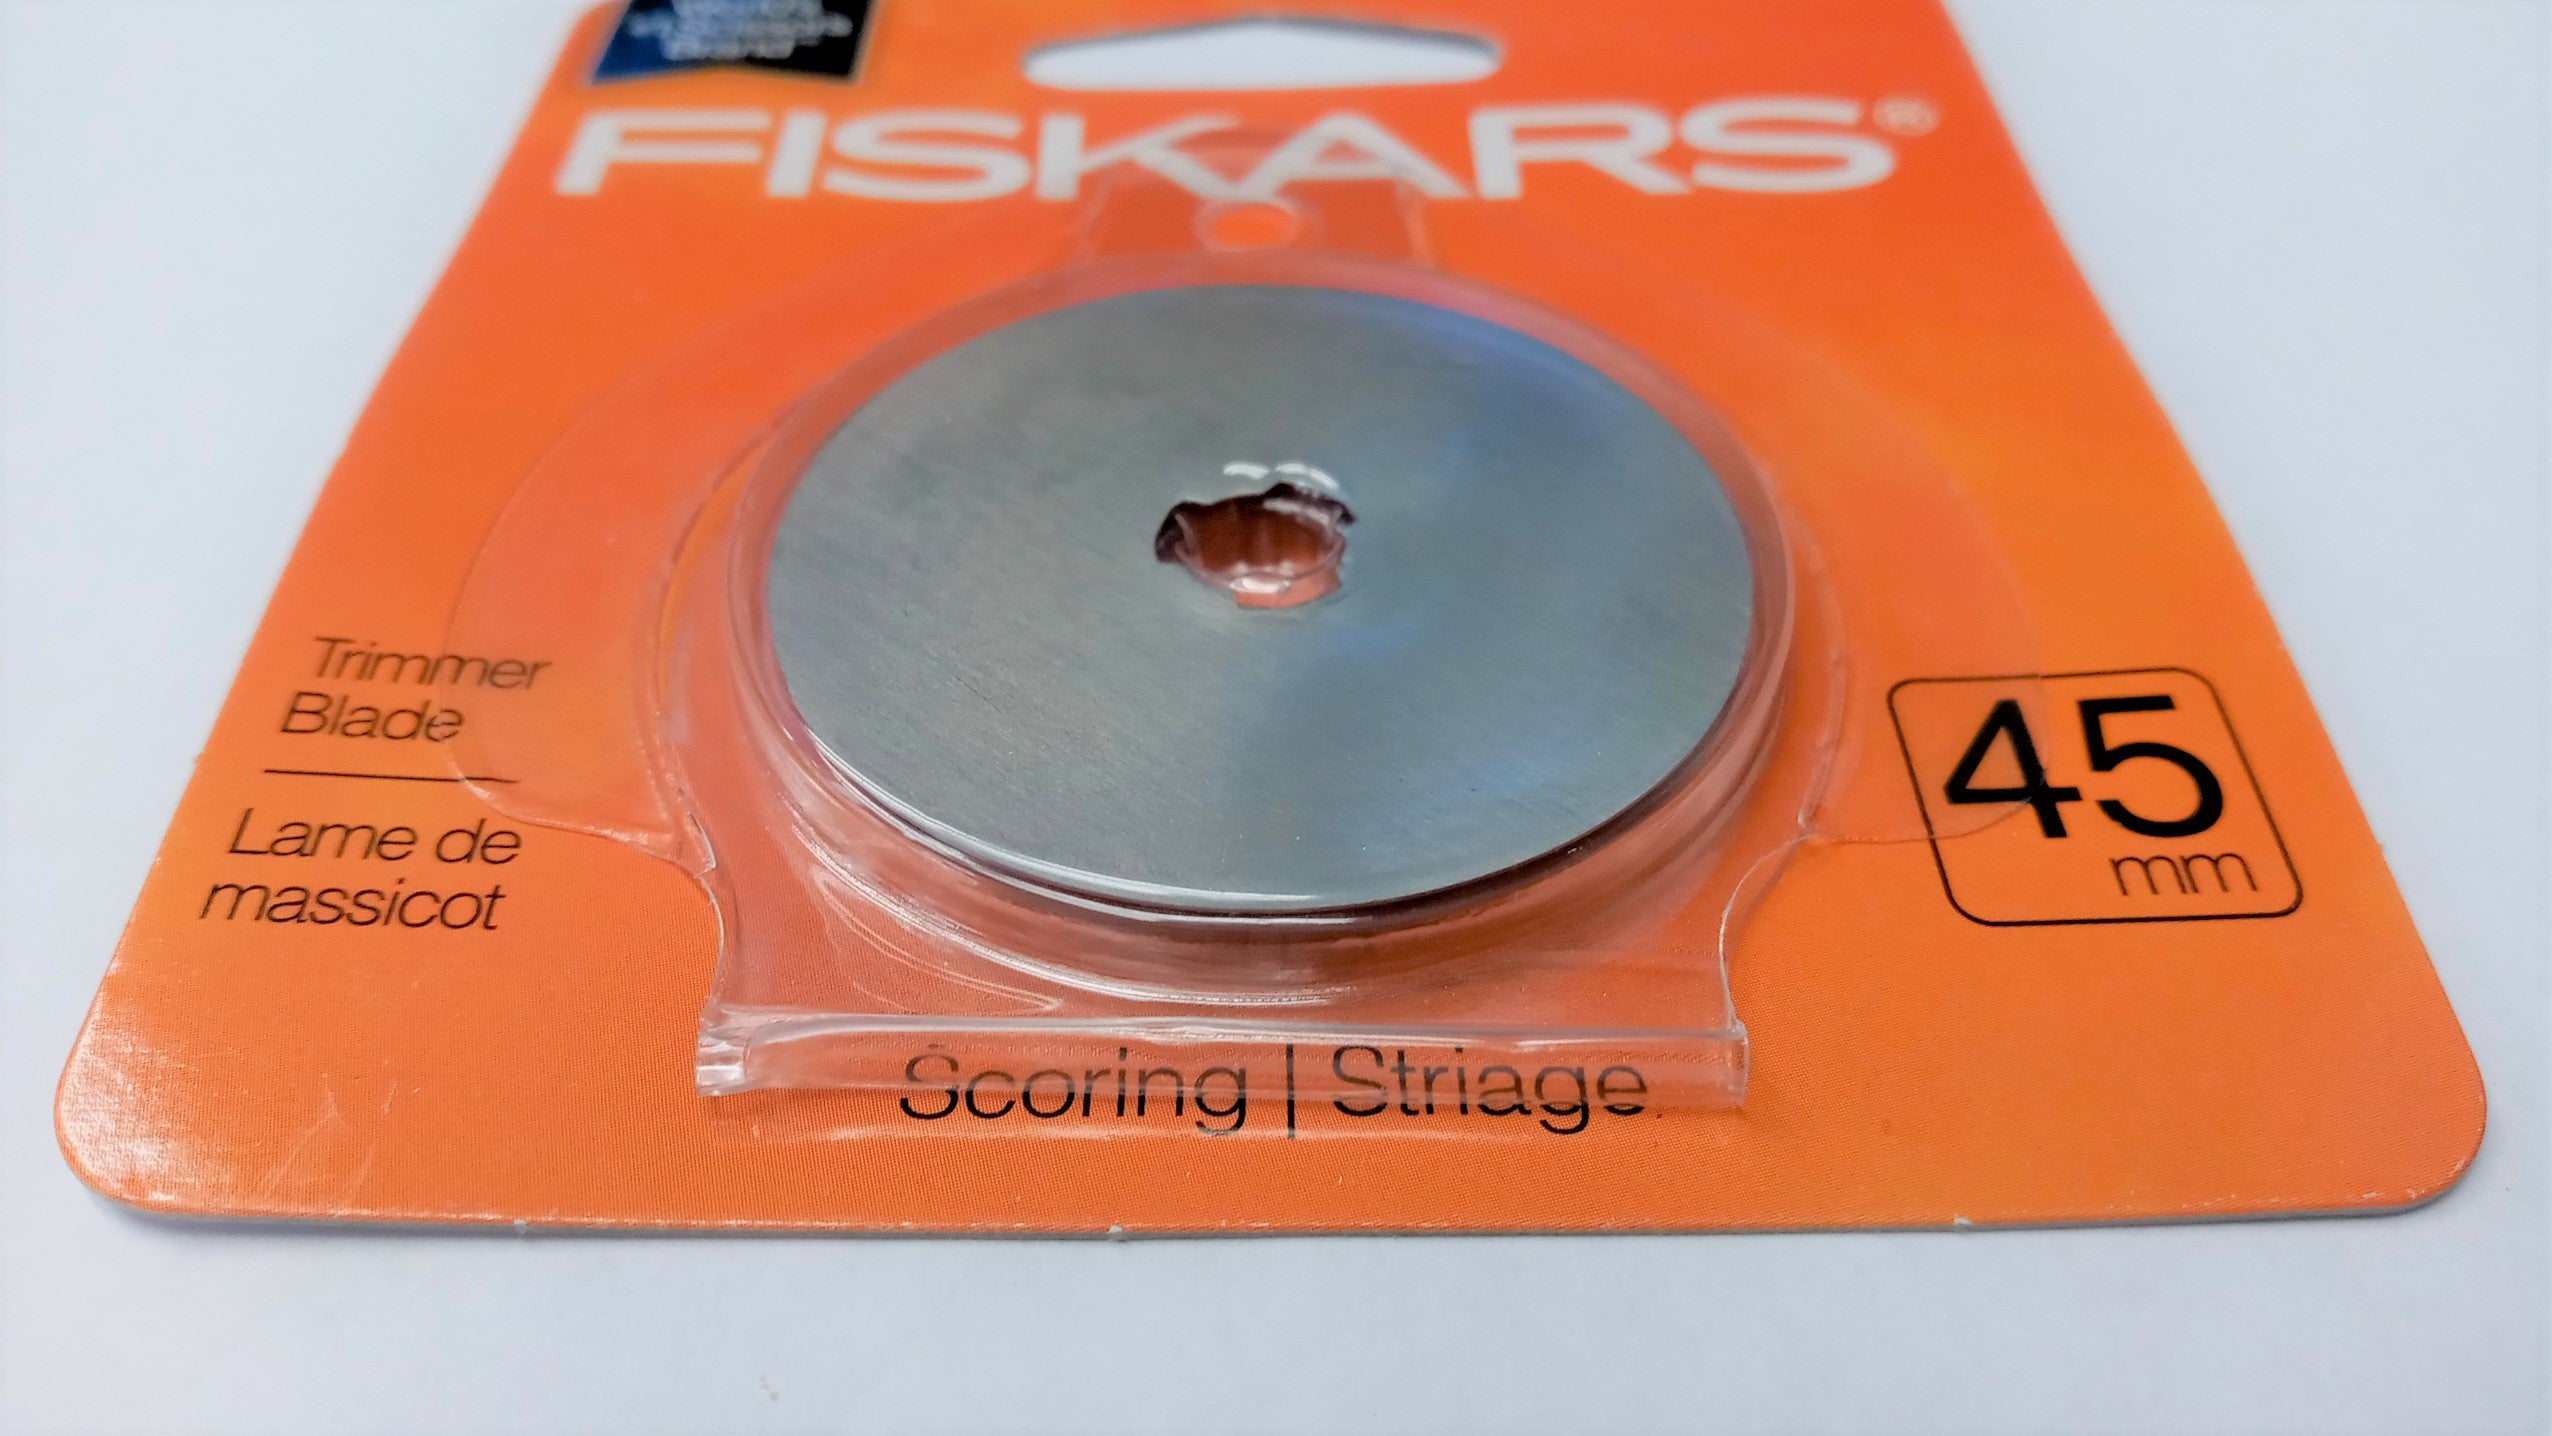 Fiskars Easy Change Ergo Control Rotary Cutter 45 mm